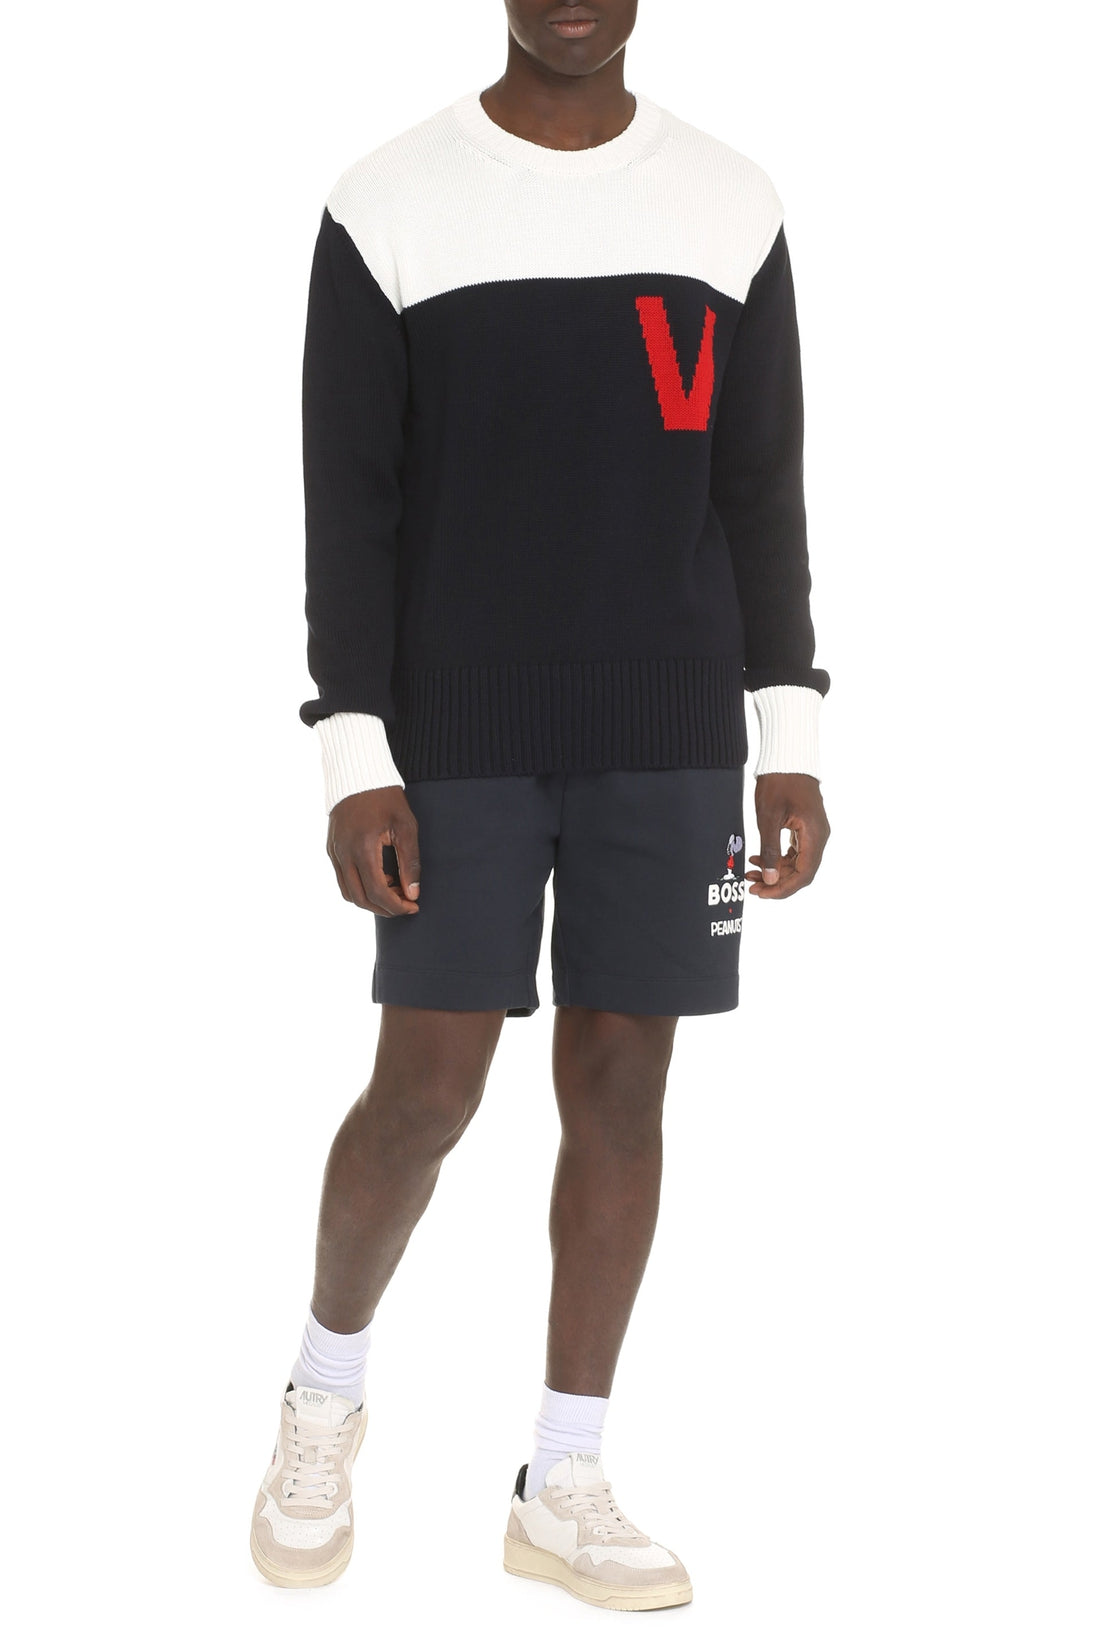 Valentino-OUTLET-SALE-Cotton crew-neck sweater-ARCHIVIST